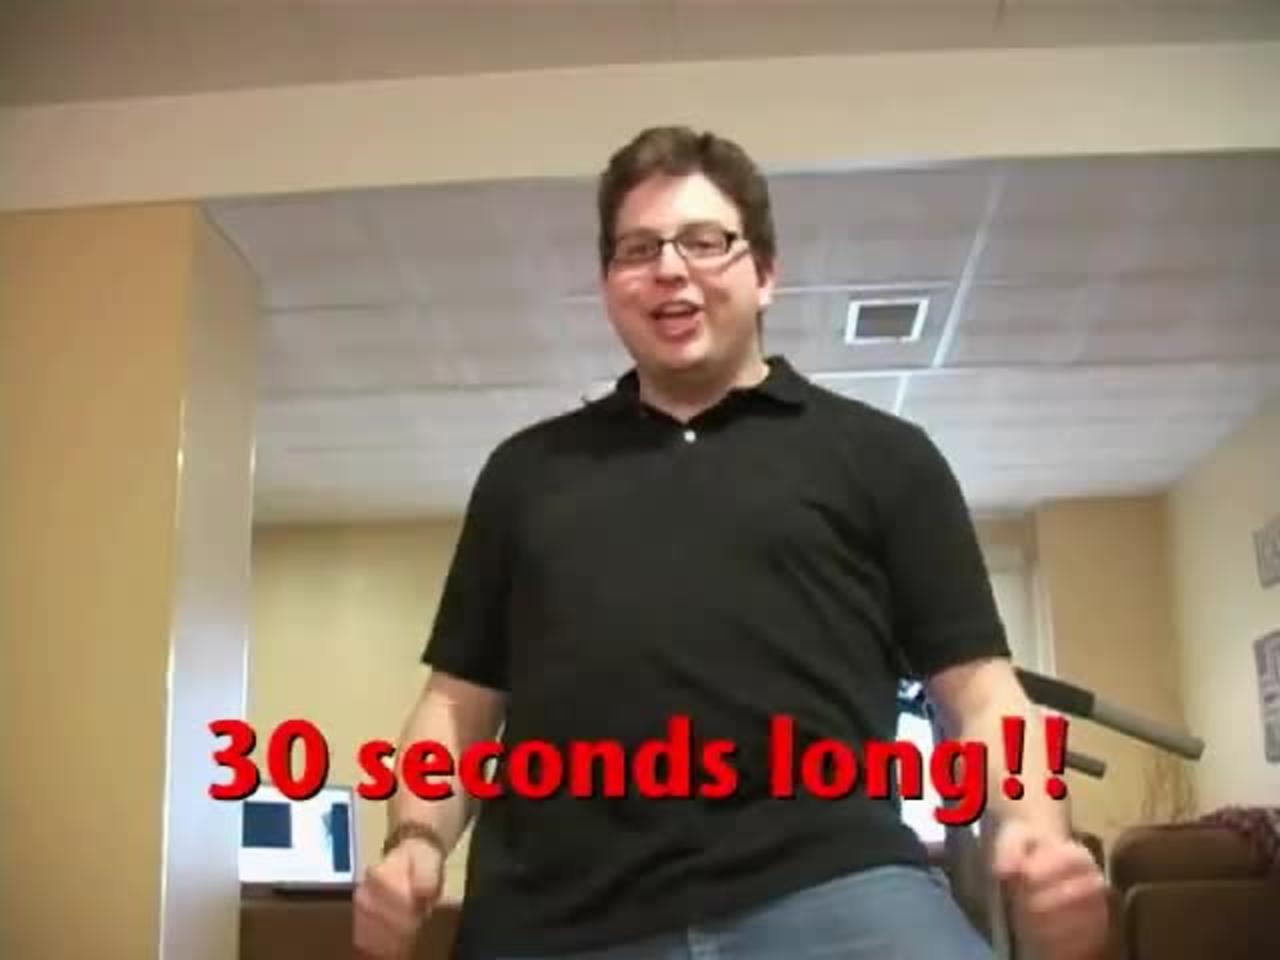 30 Seconds Long Video Lol 😂